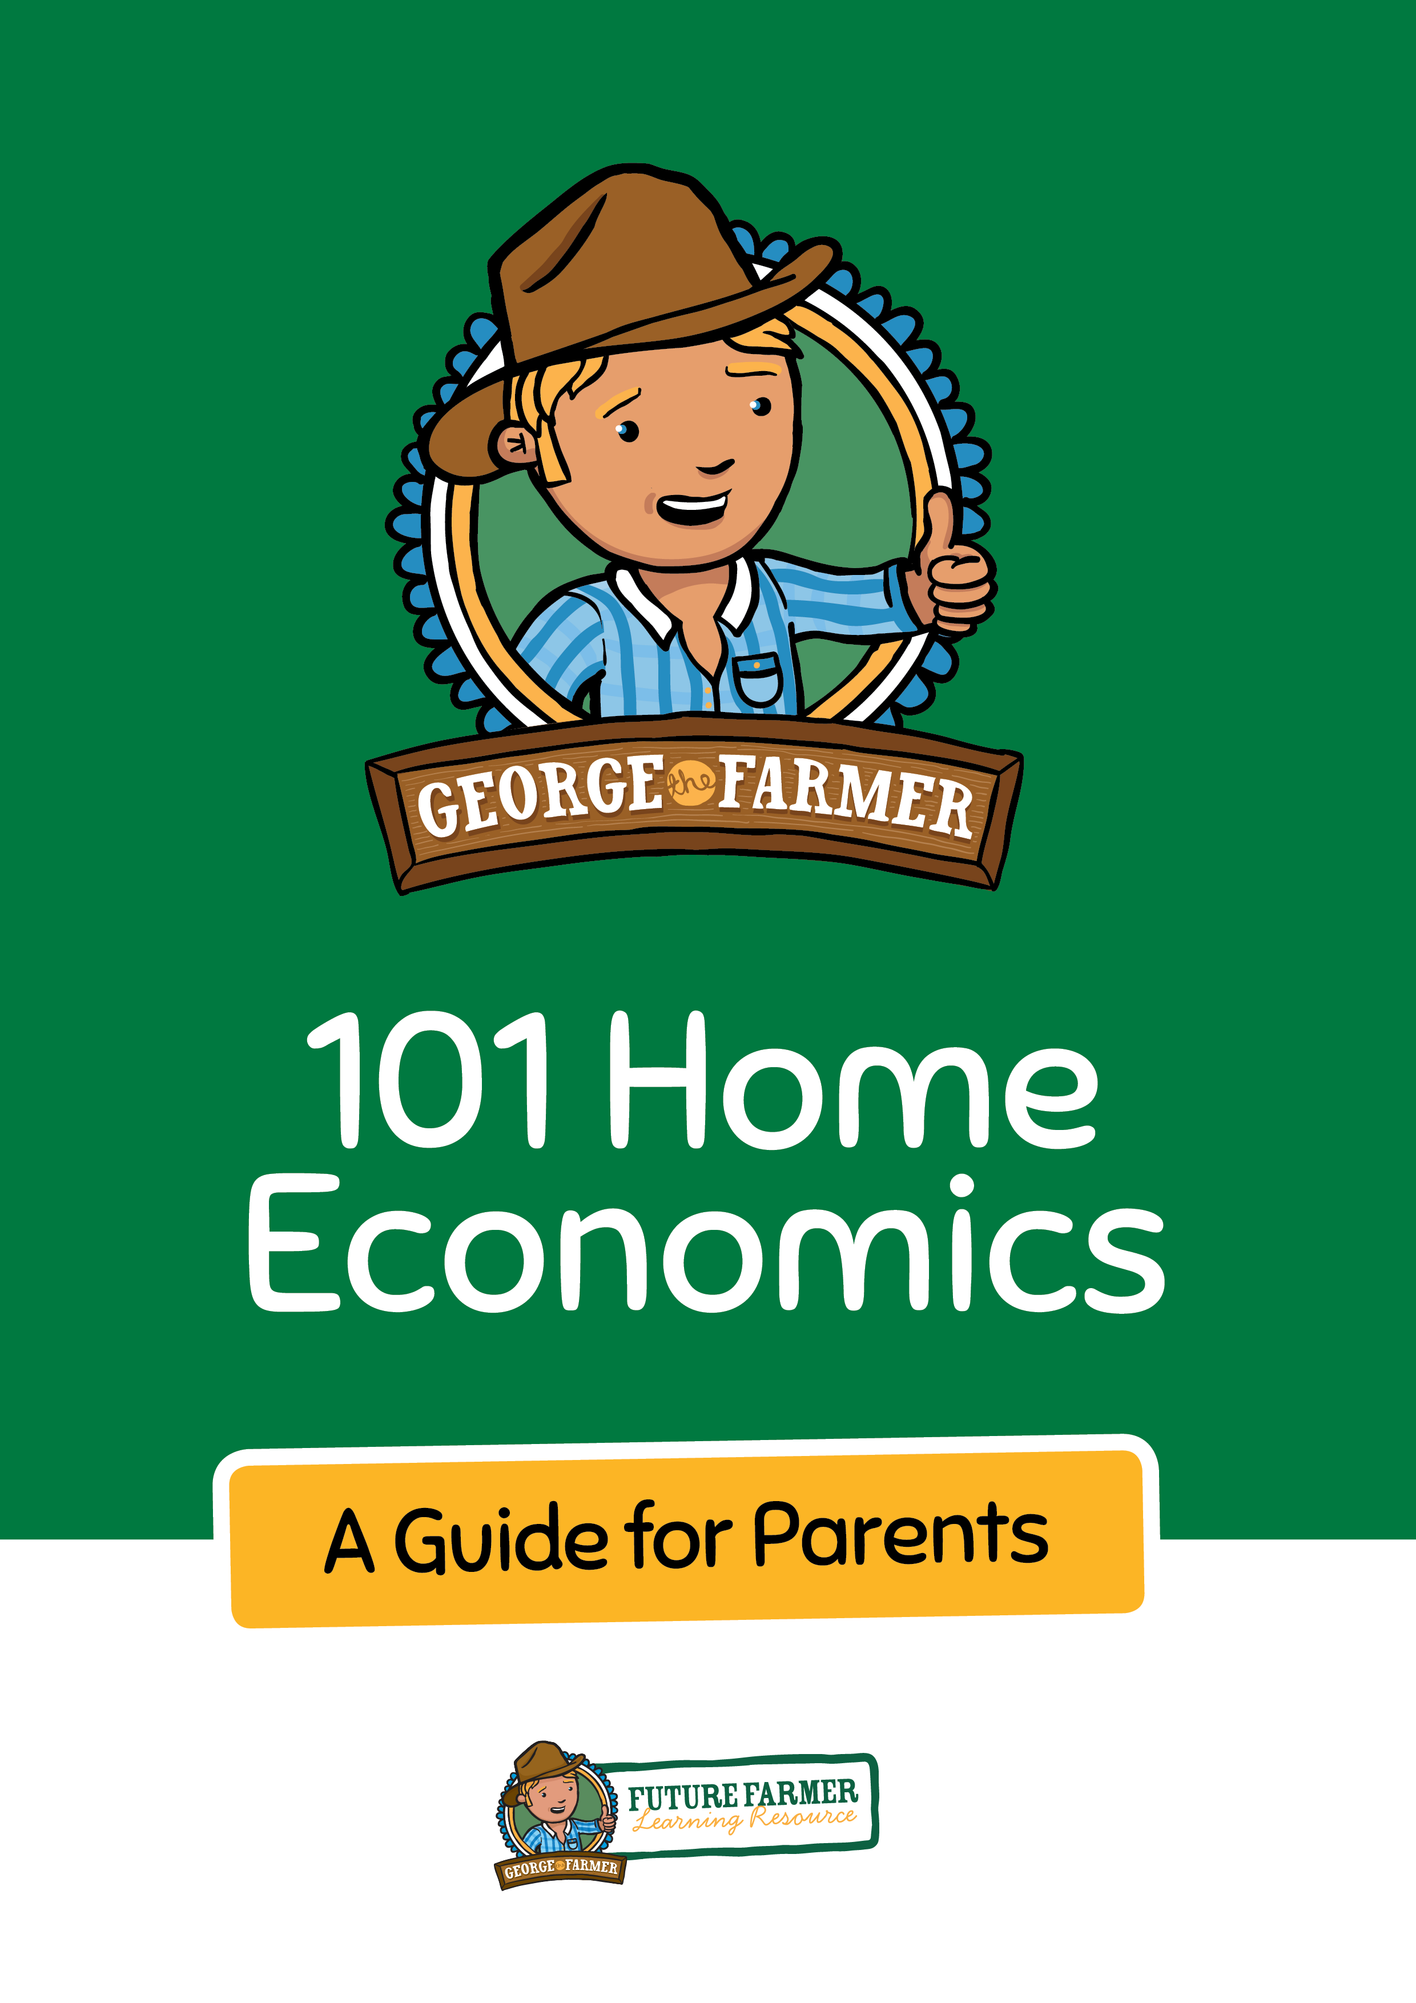 101 Home Economics Guide for Parents - NEW